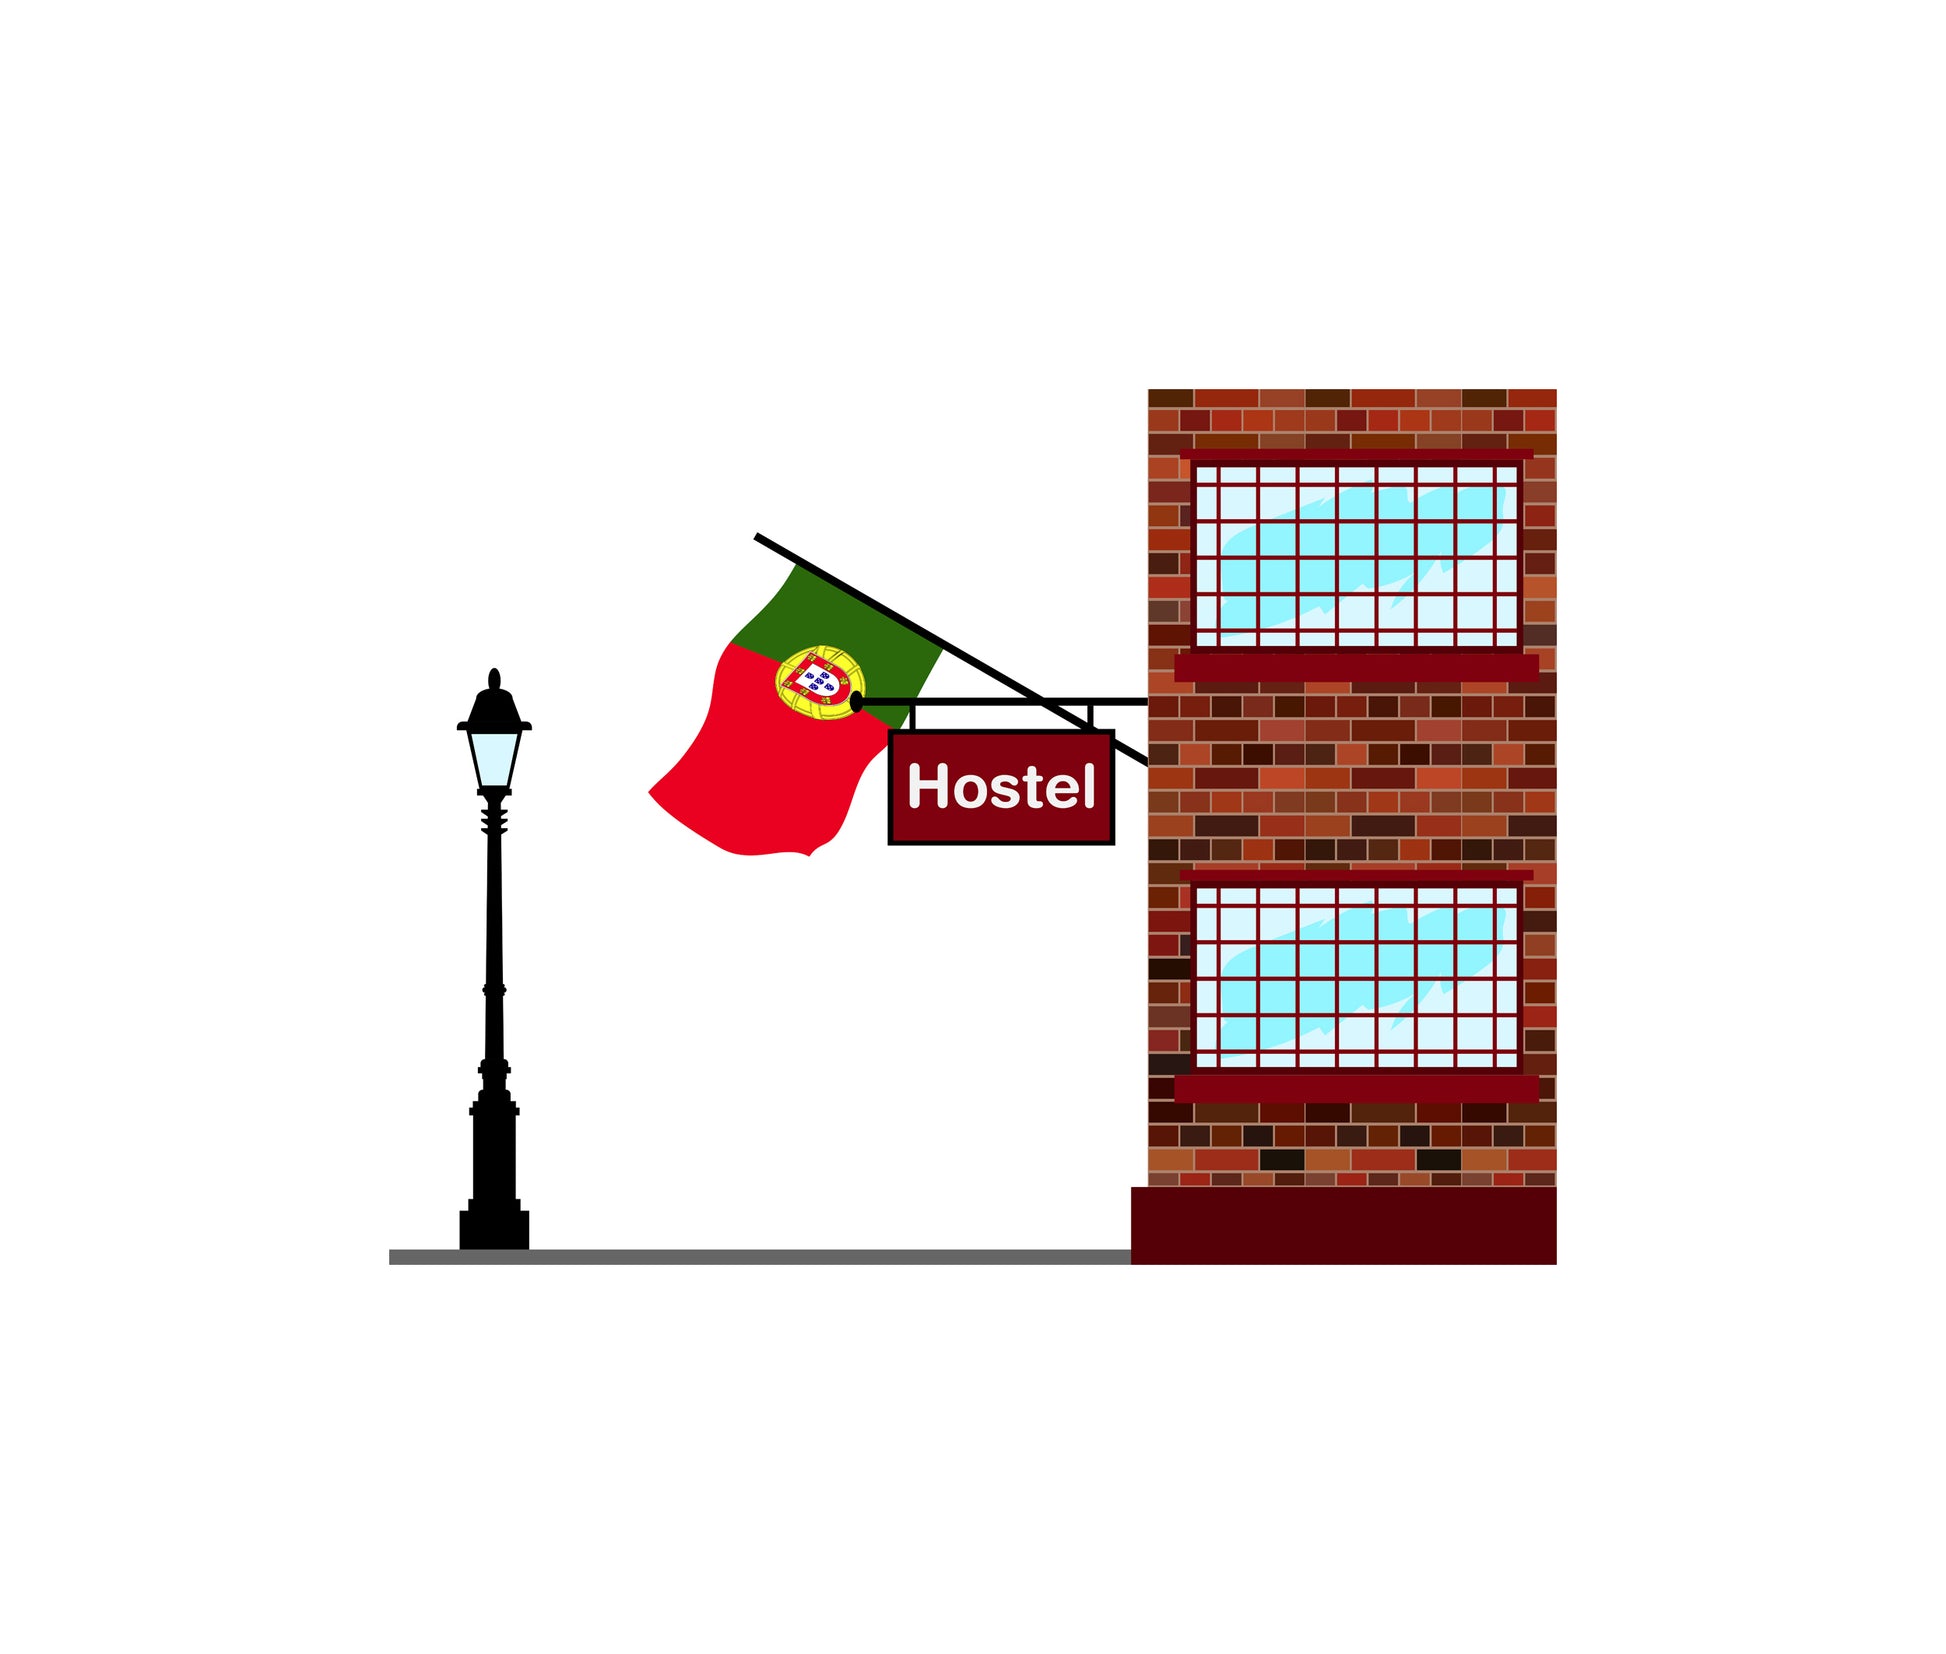 Portugal Hostels Hotel Vector Illustration